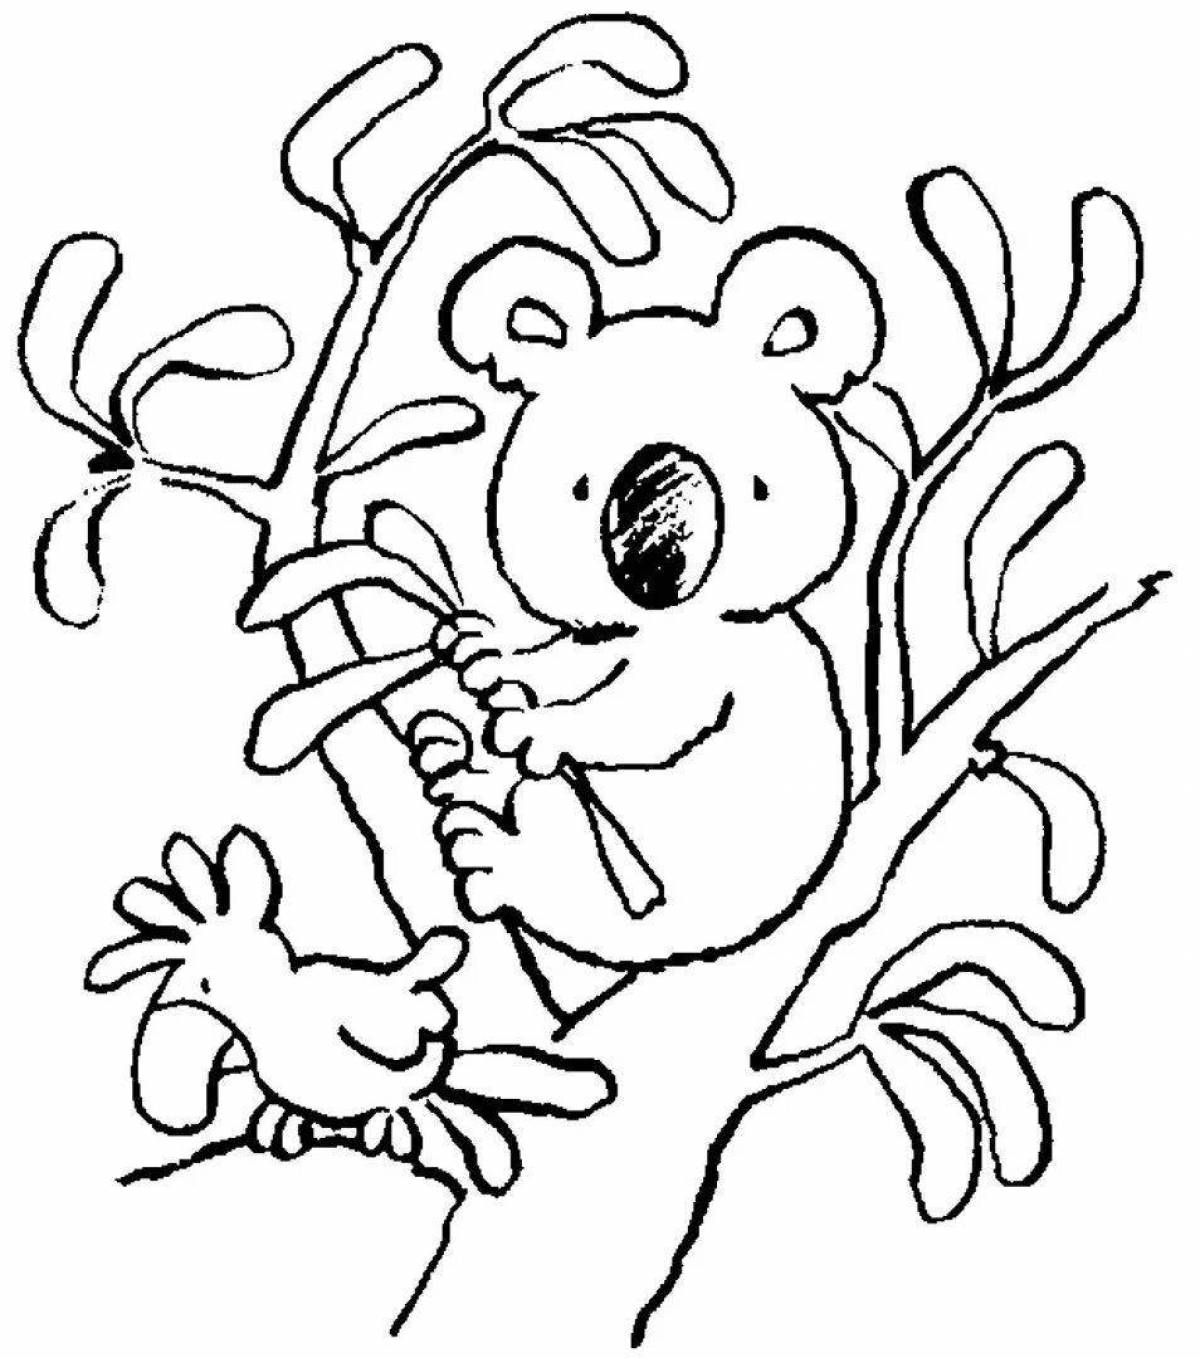 Playful koala coloring for kids